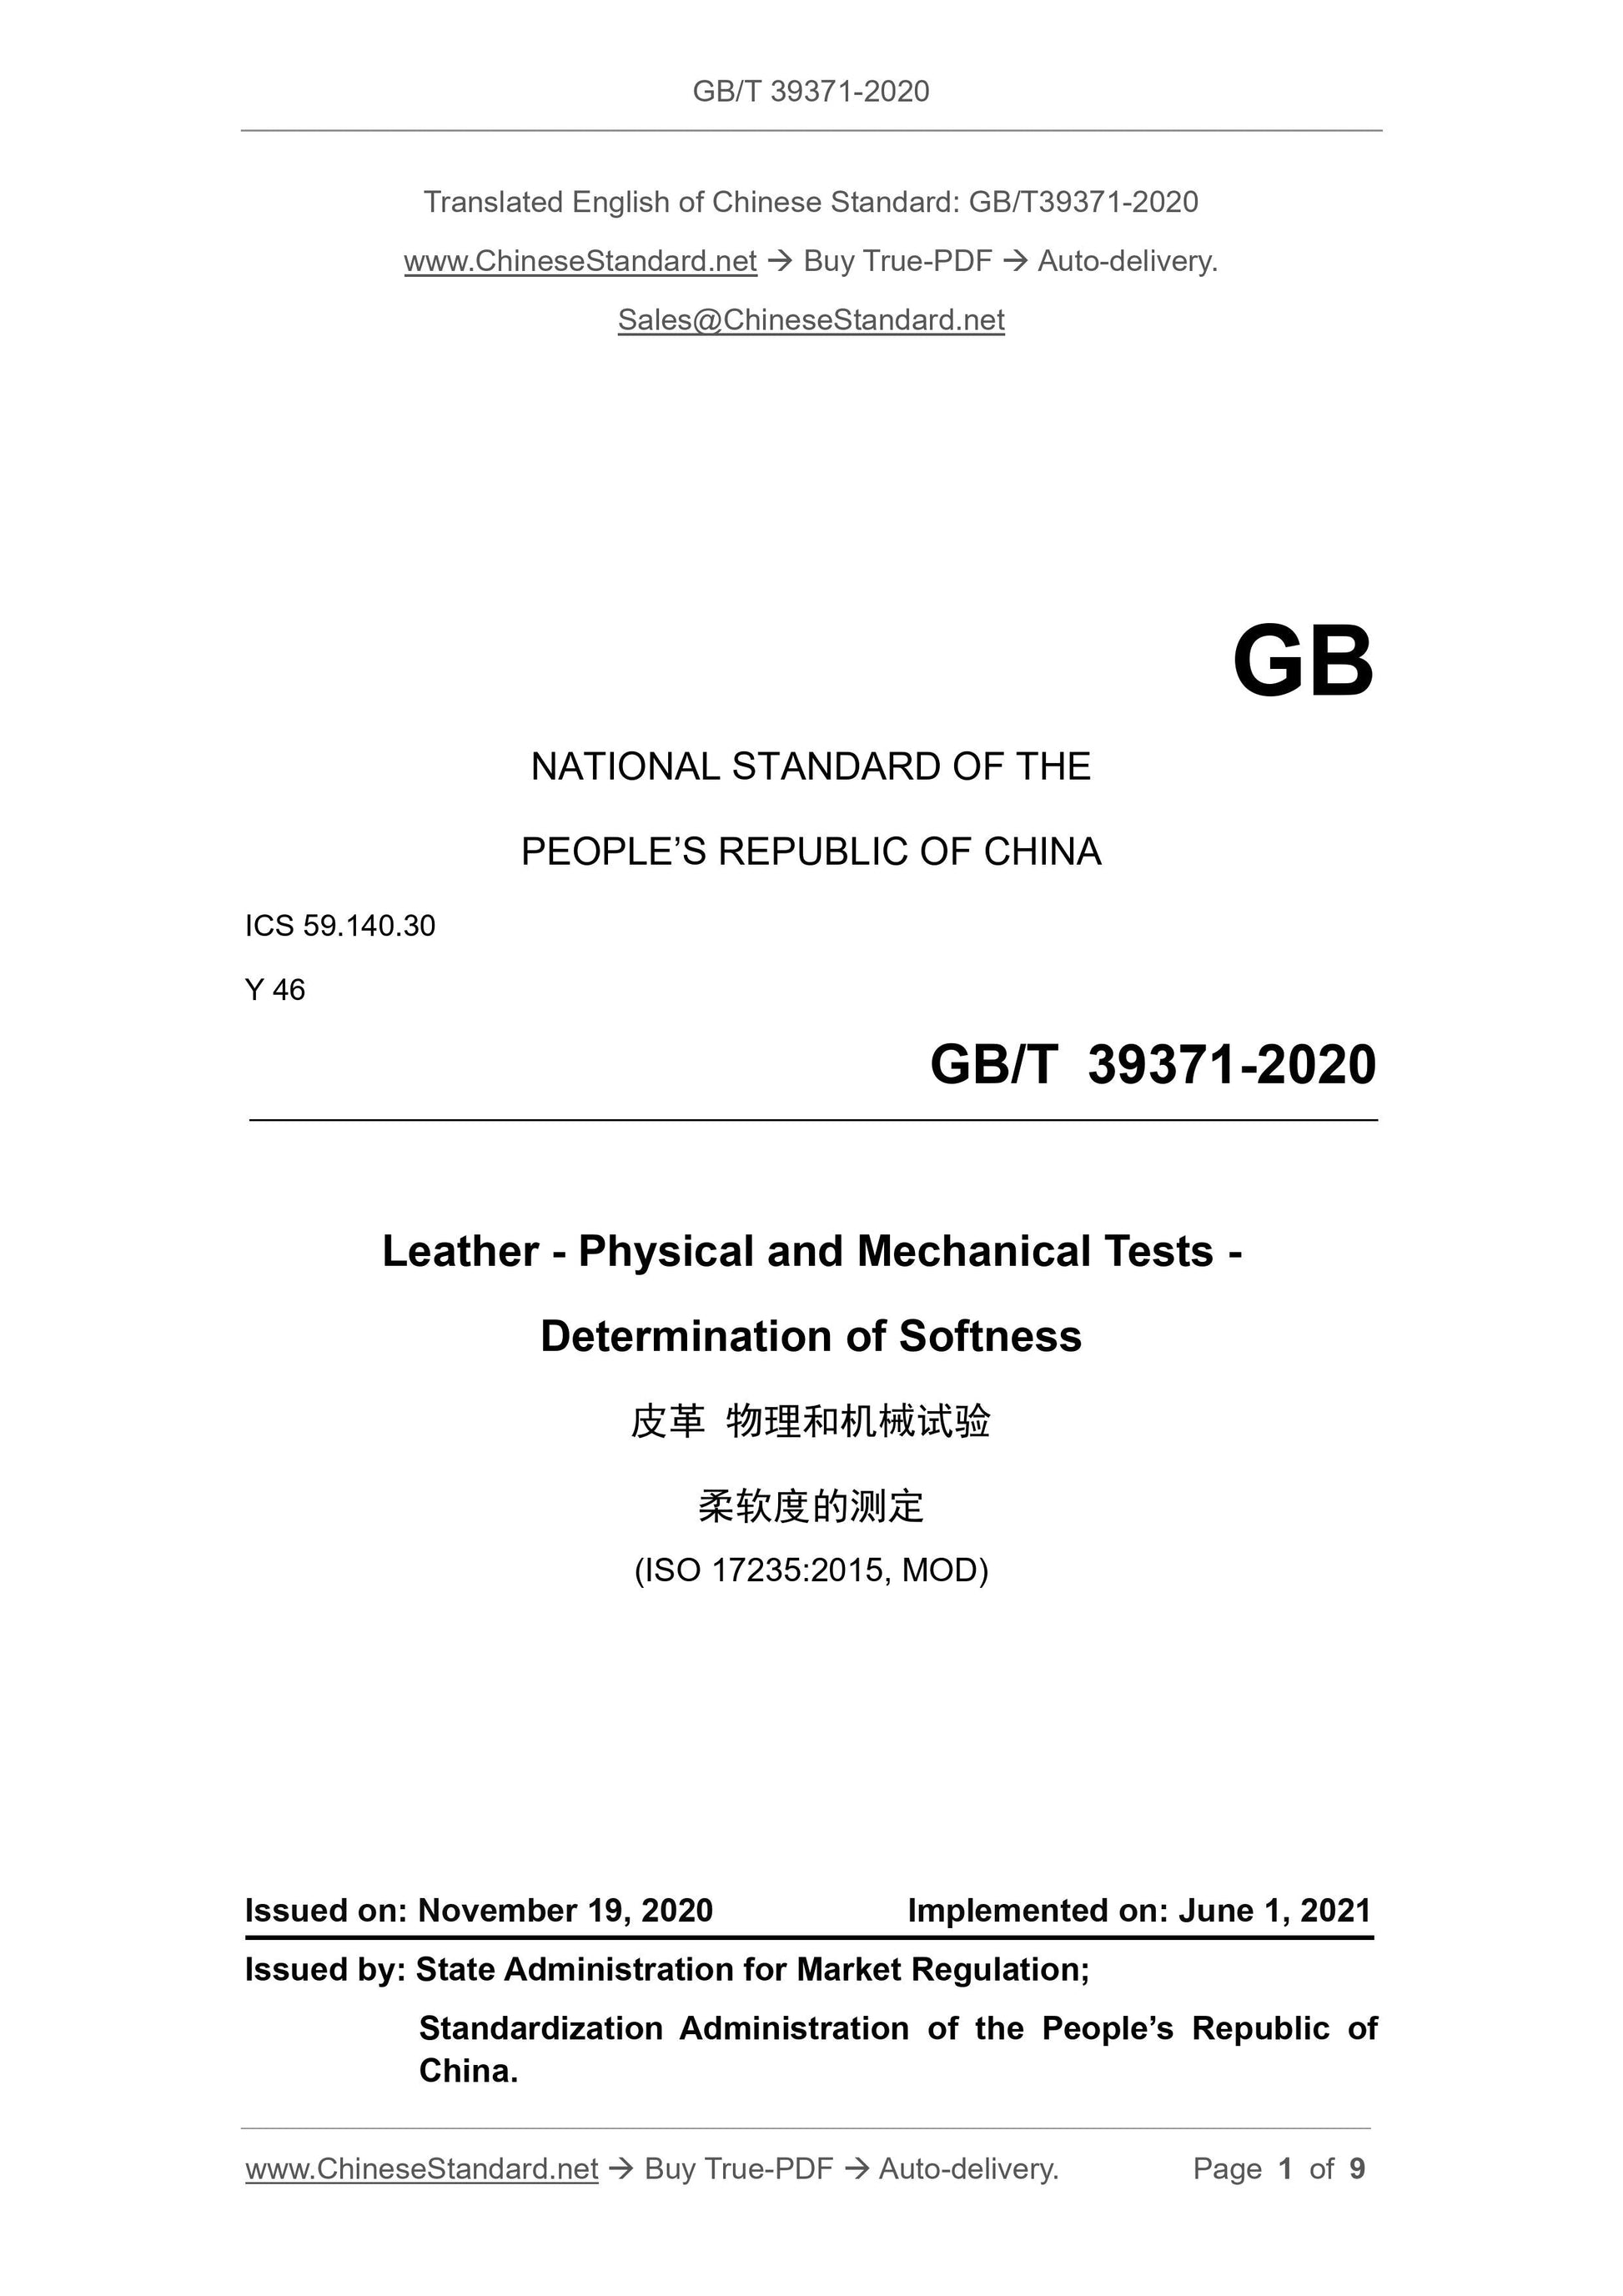 GBT39371-2020 Page 1